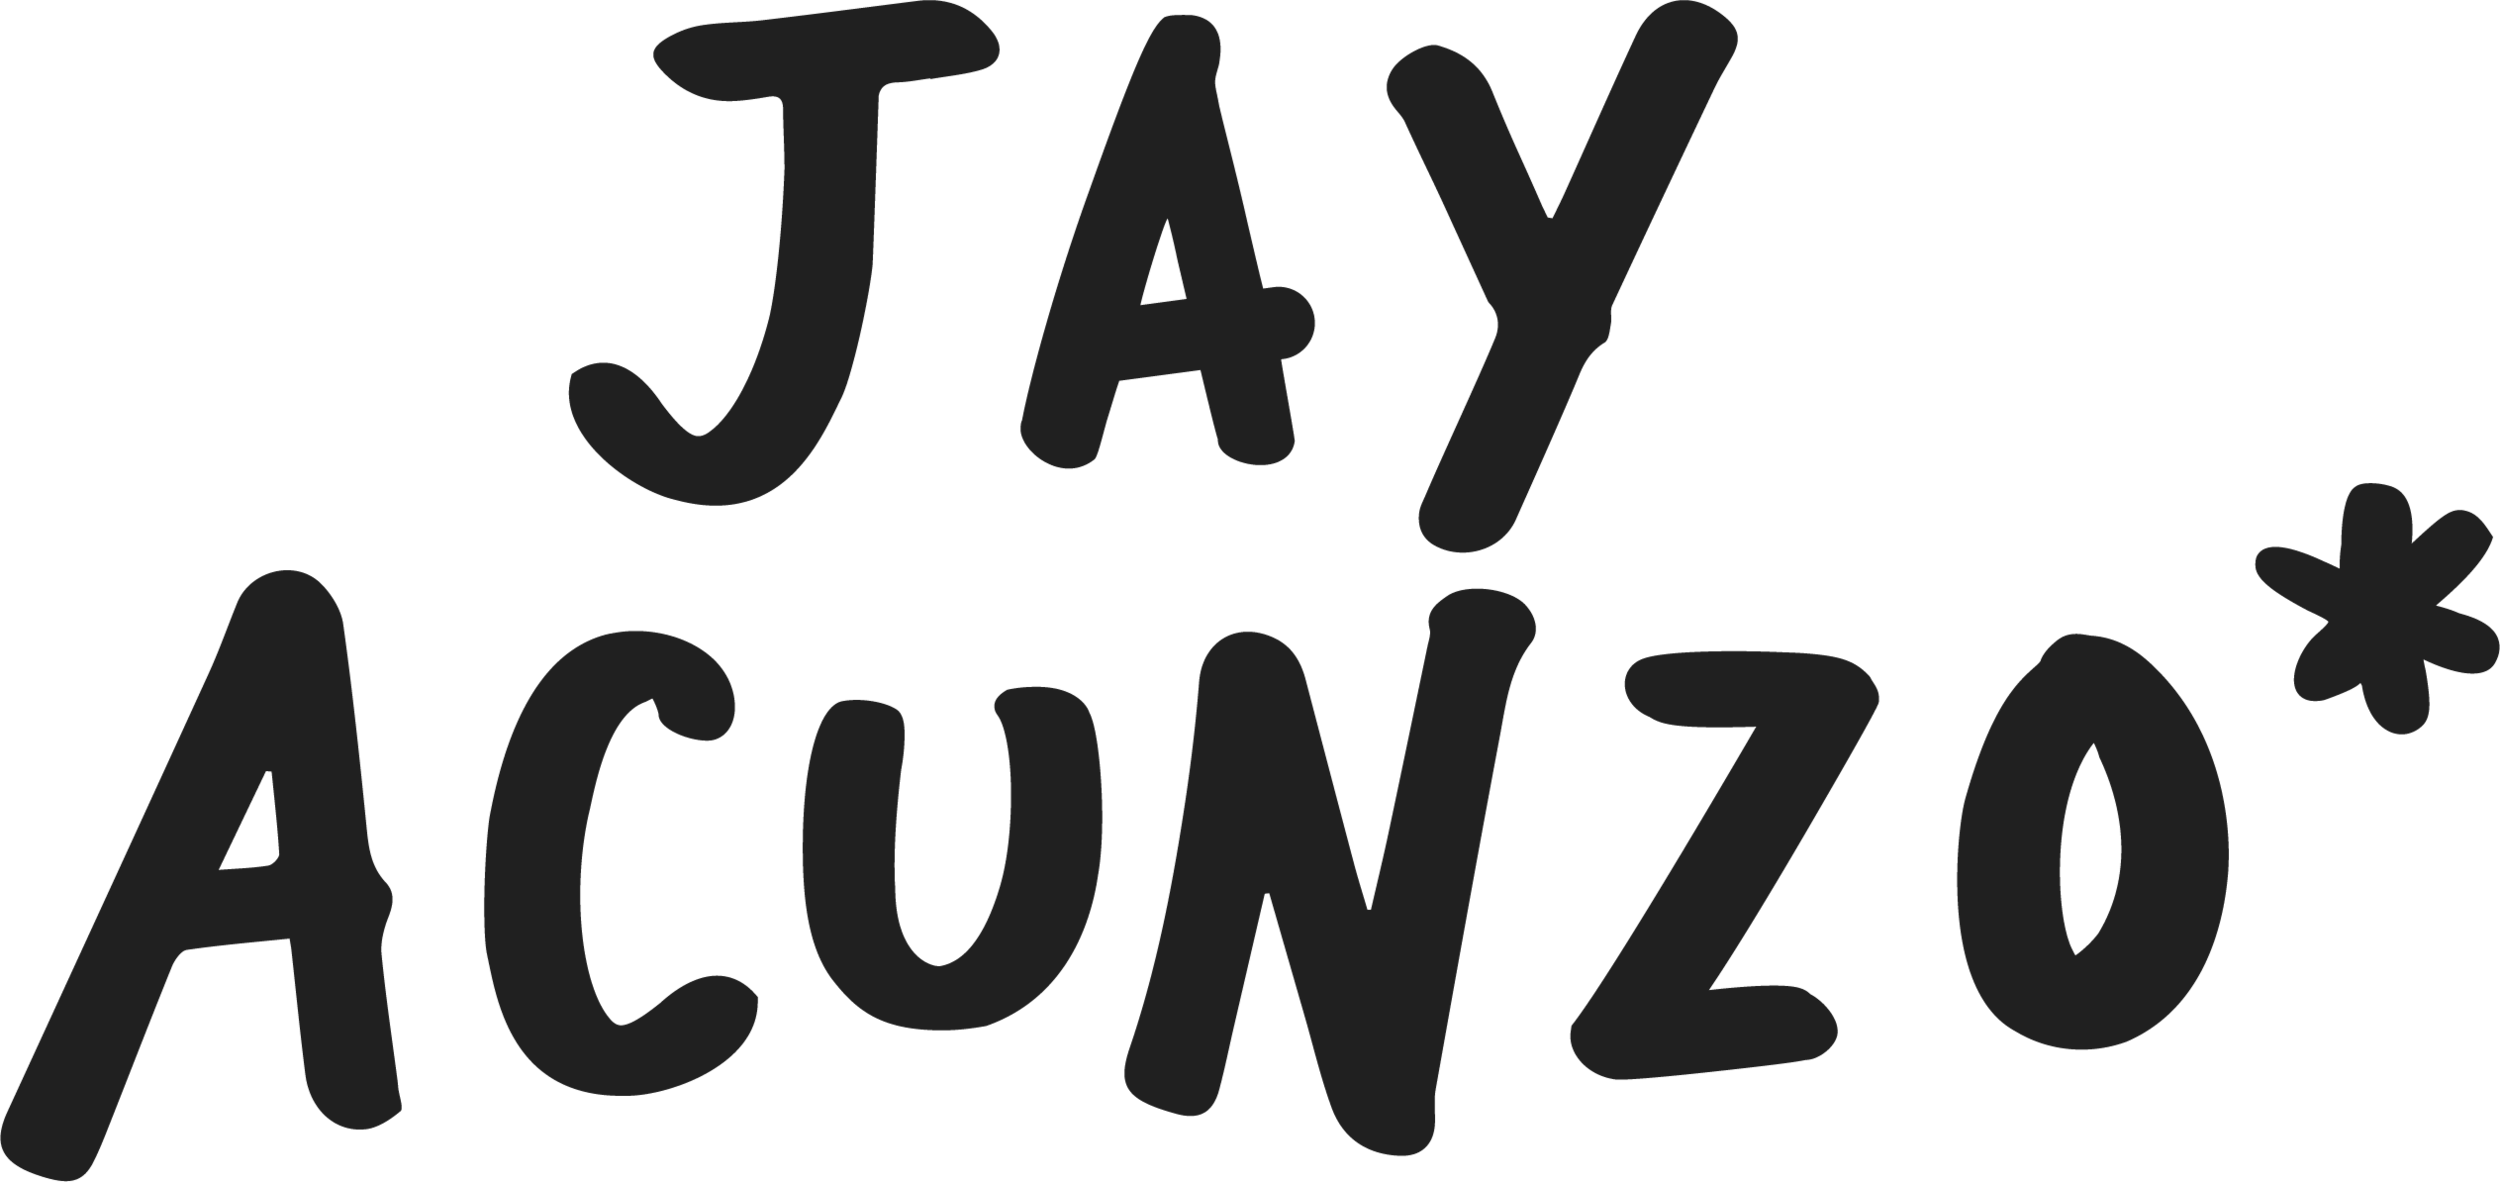 Jay Acunzo